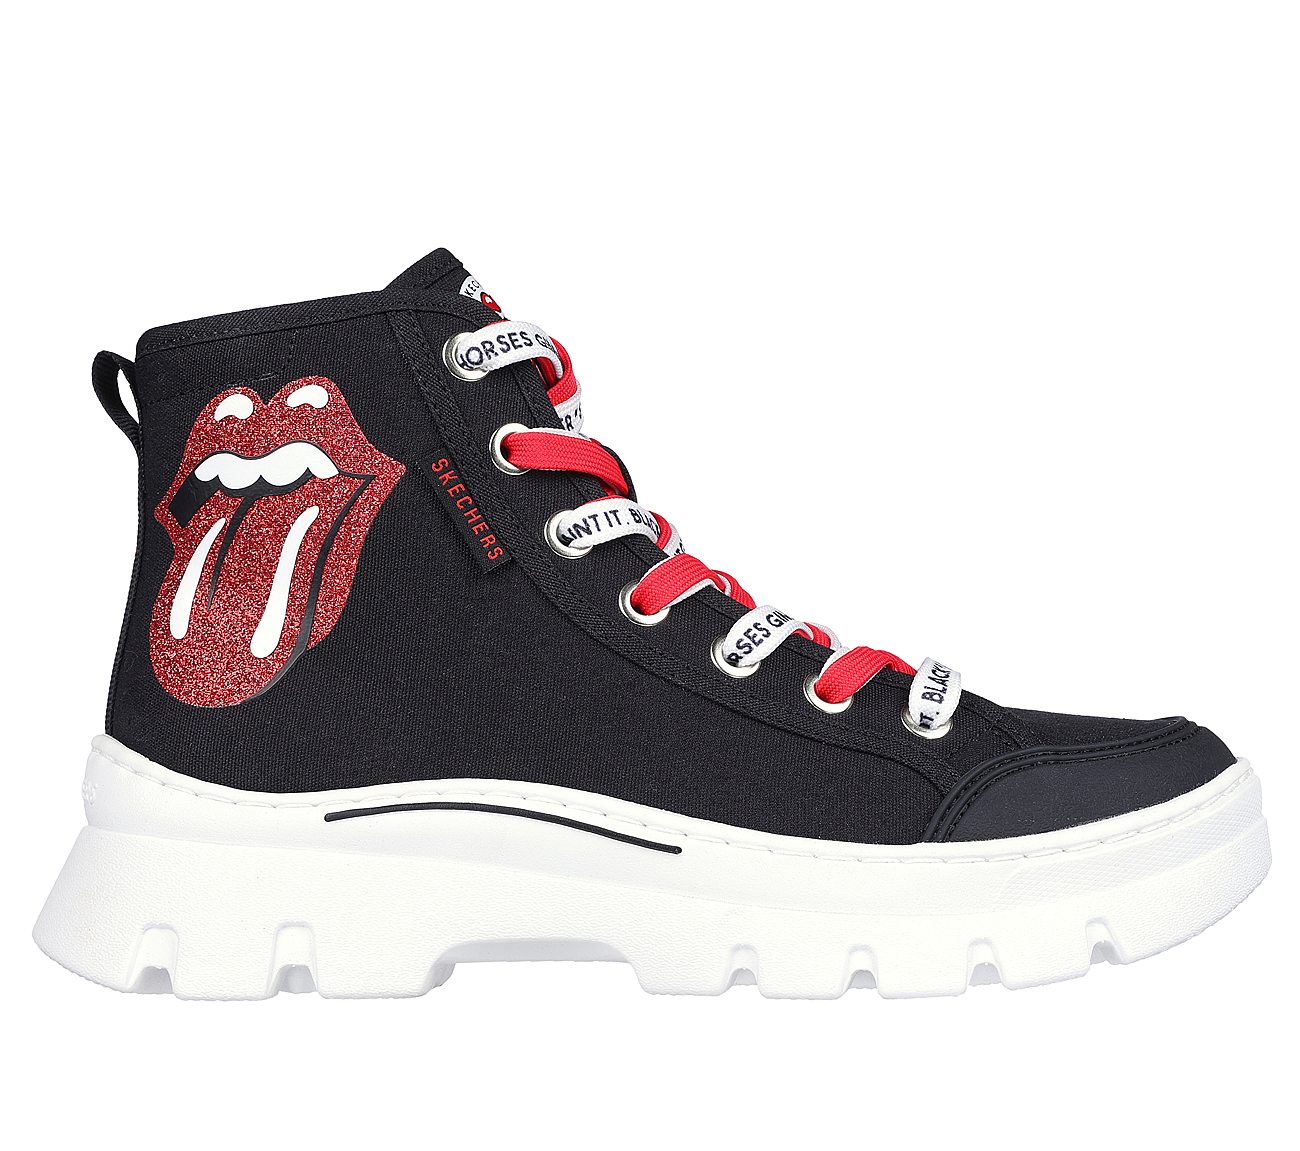 Rolling Stones: Roadies Surge - Lick & Lyrics, BLACK/RED Footwear Lateral View